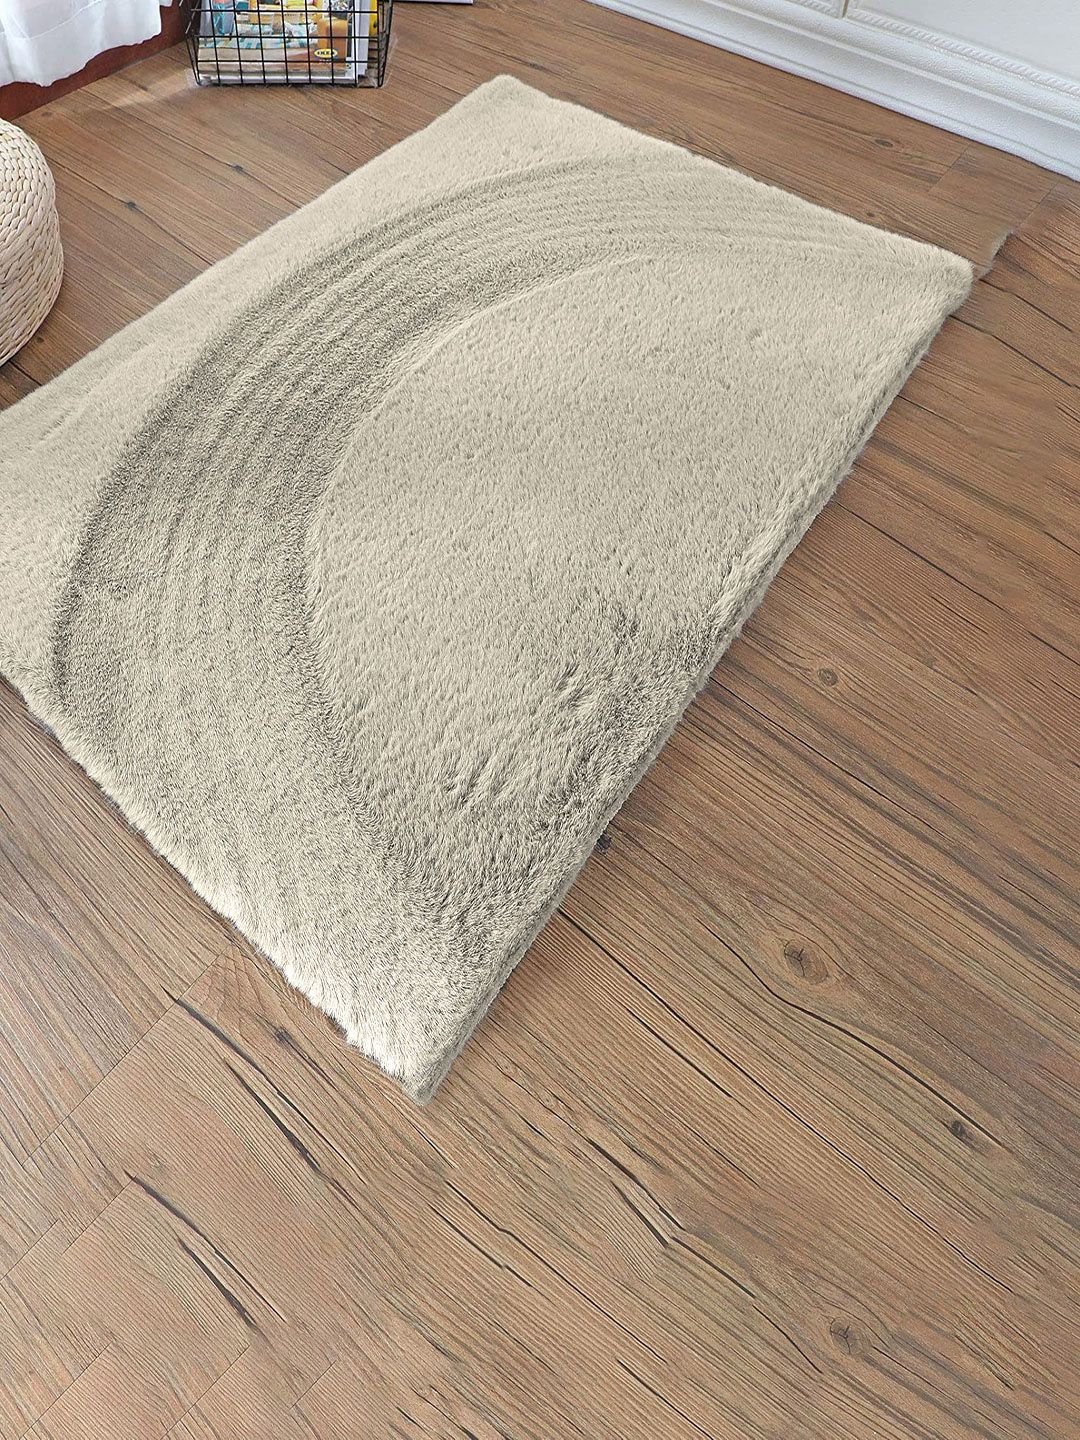 LUXEHOME INTERNATIONAL Beige Solid Anti-Skid Doormat Price in India